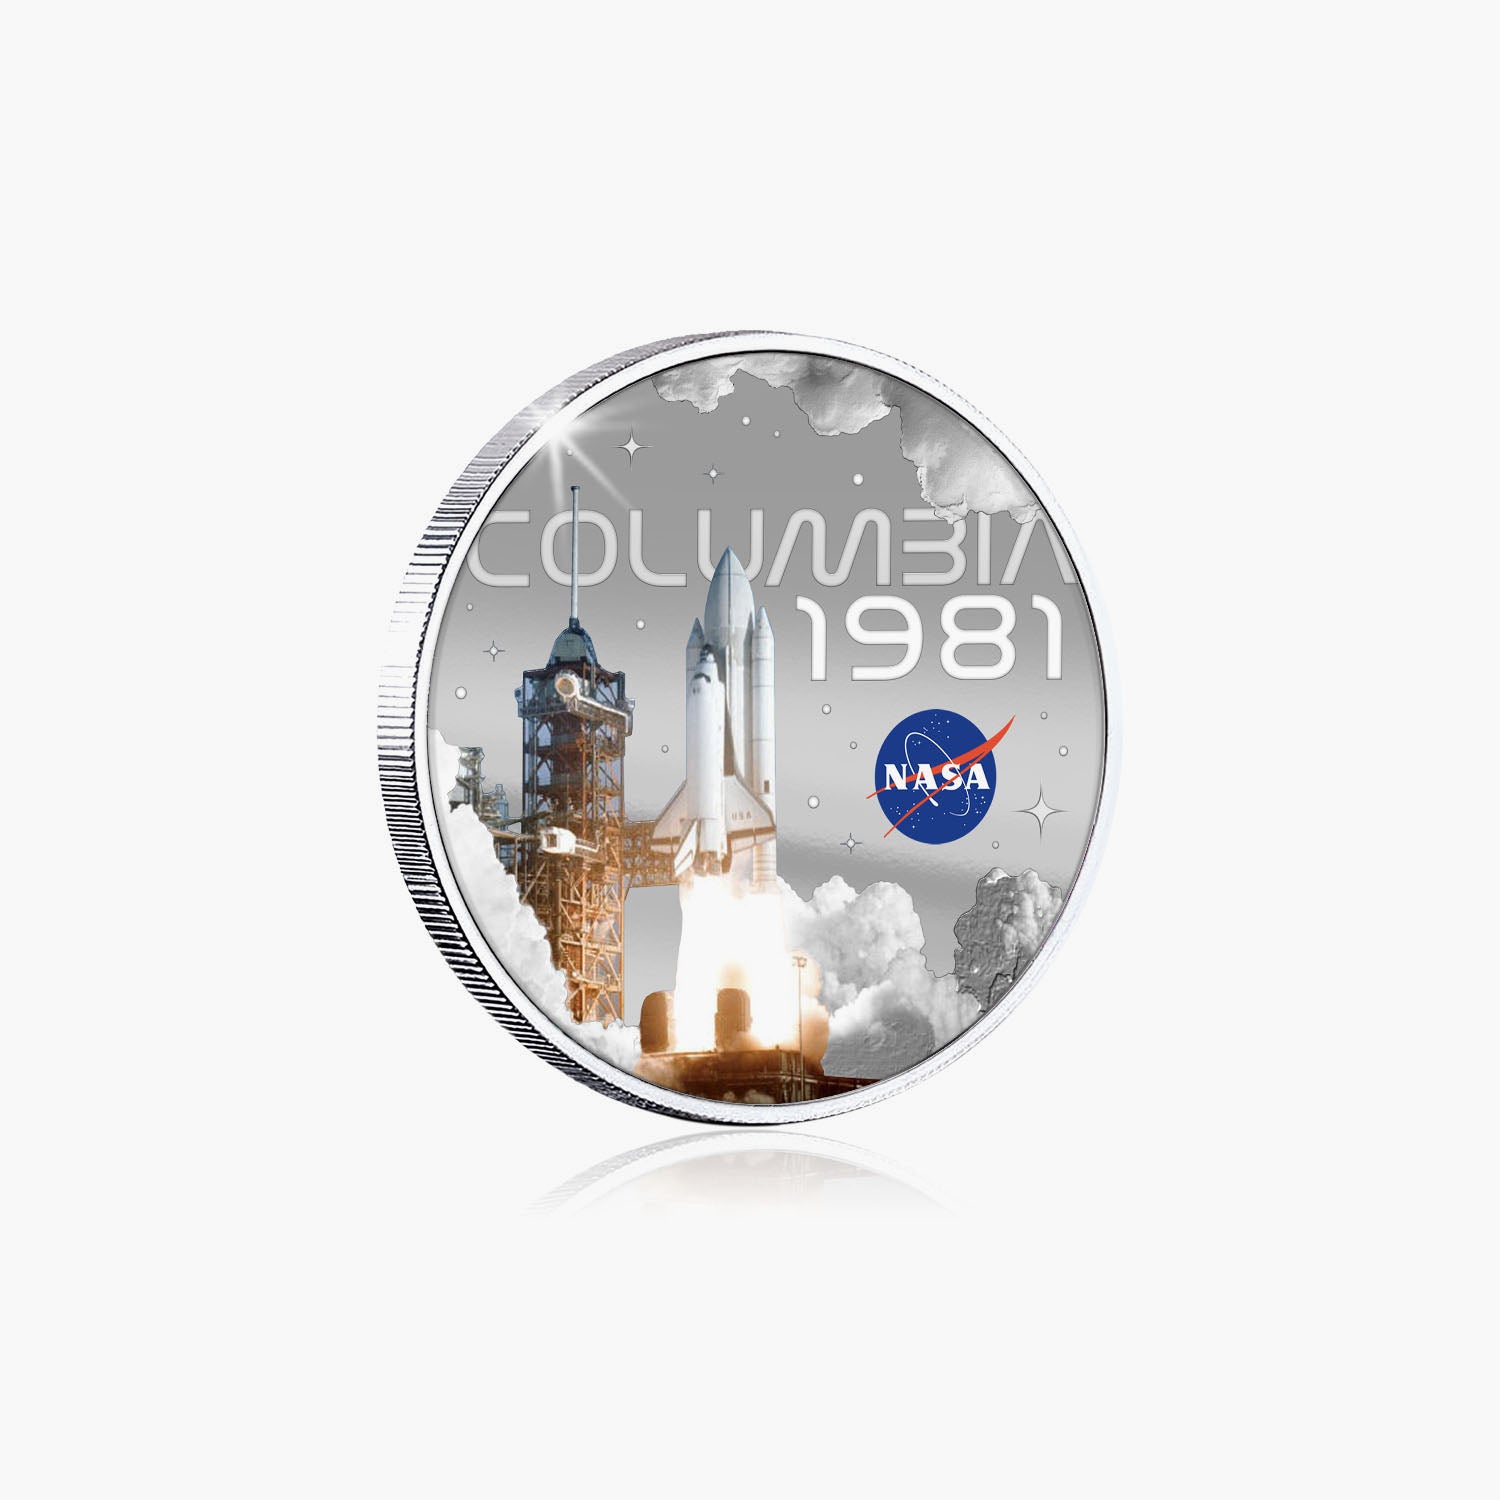 NASA 2023 Columbia 50mm Silver-plated Coin